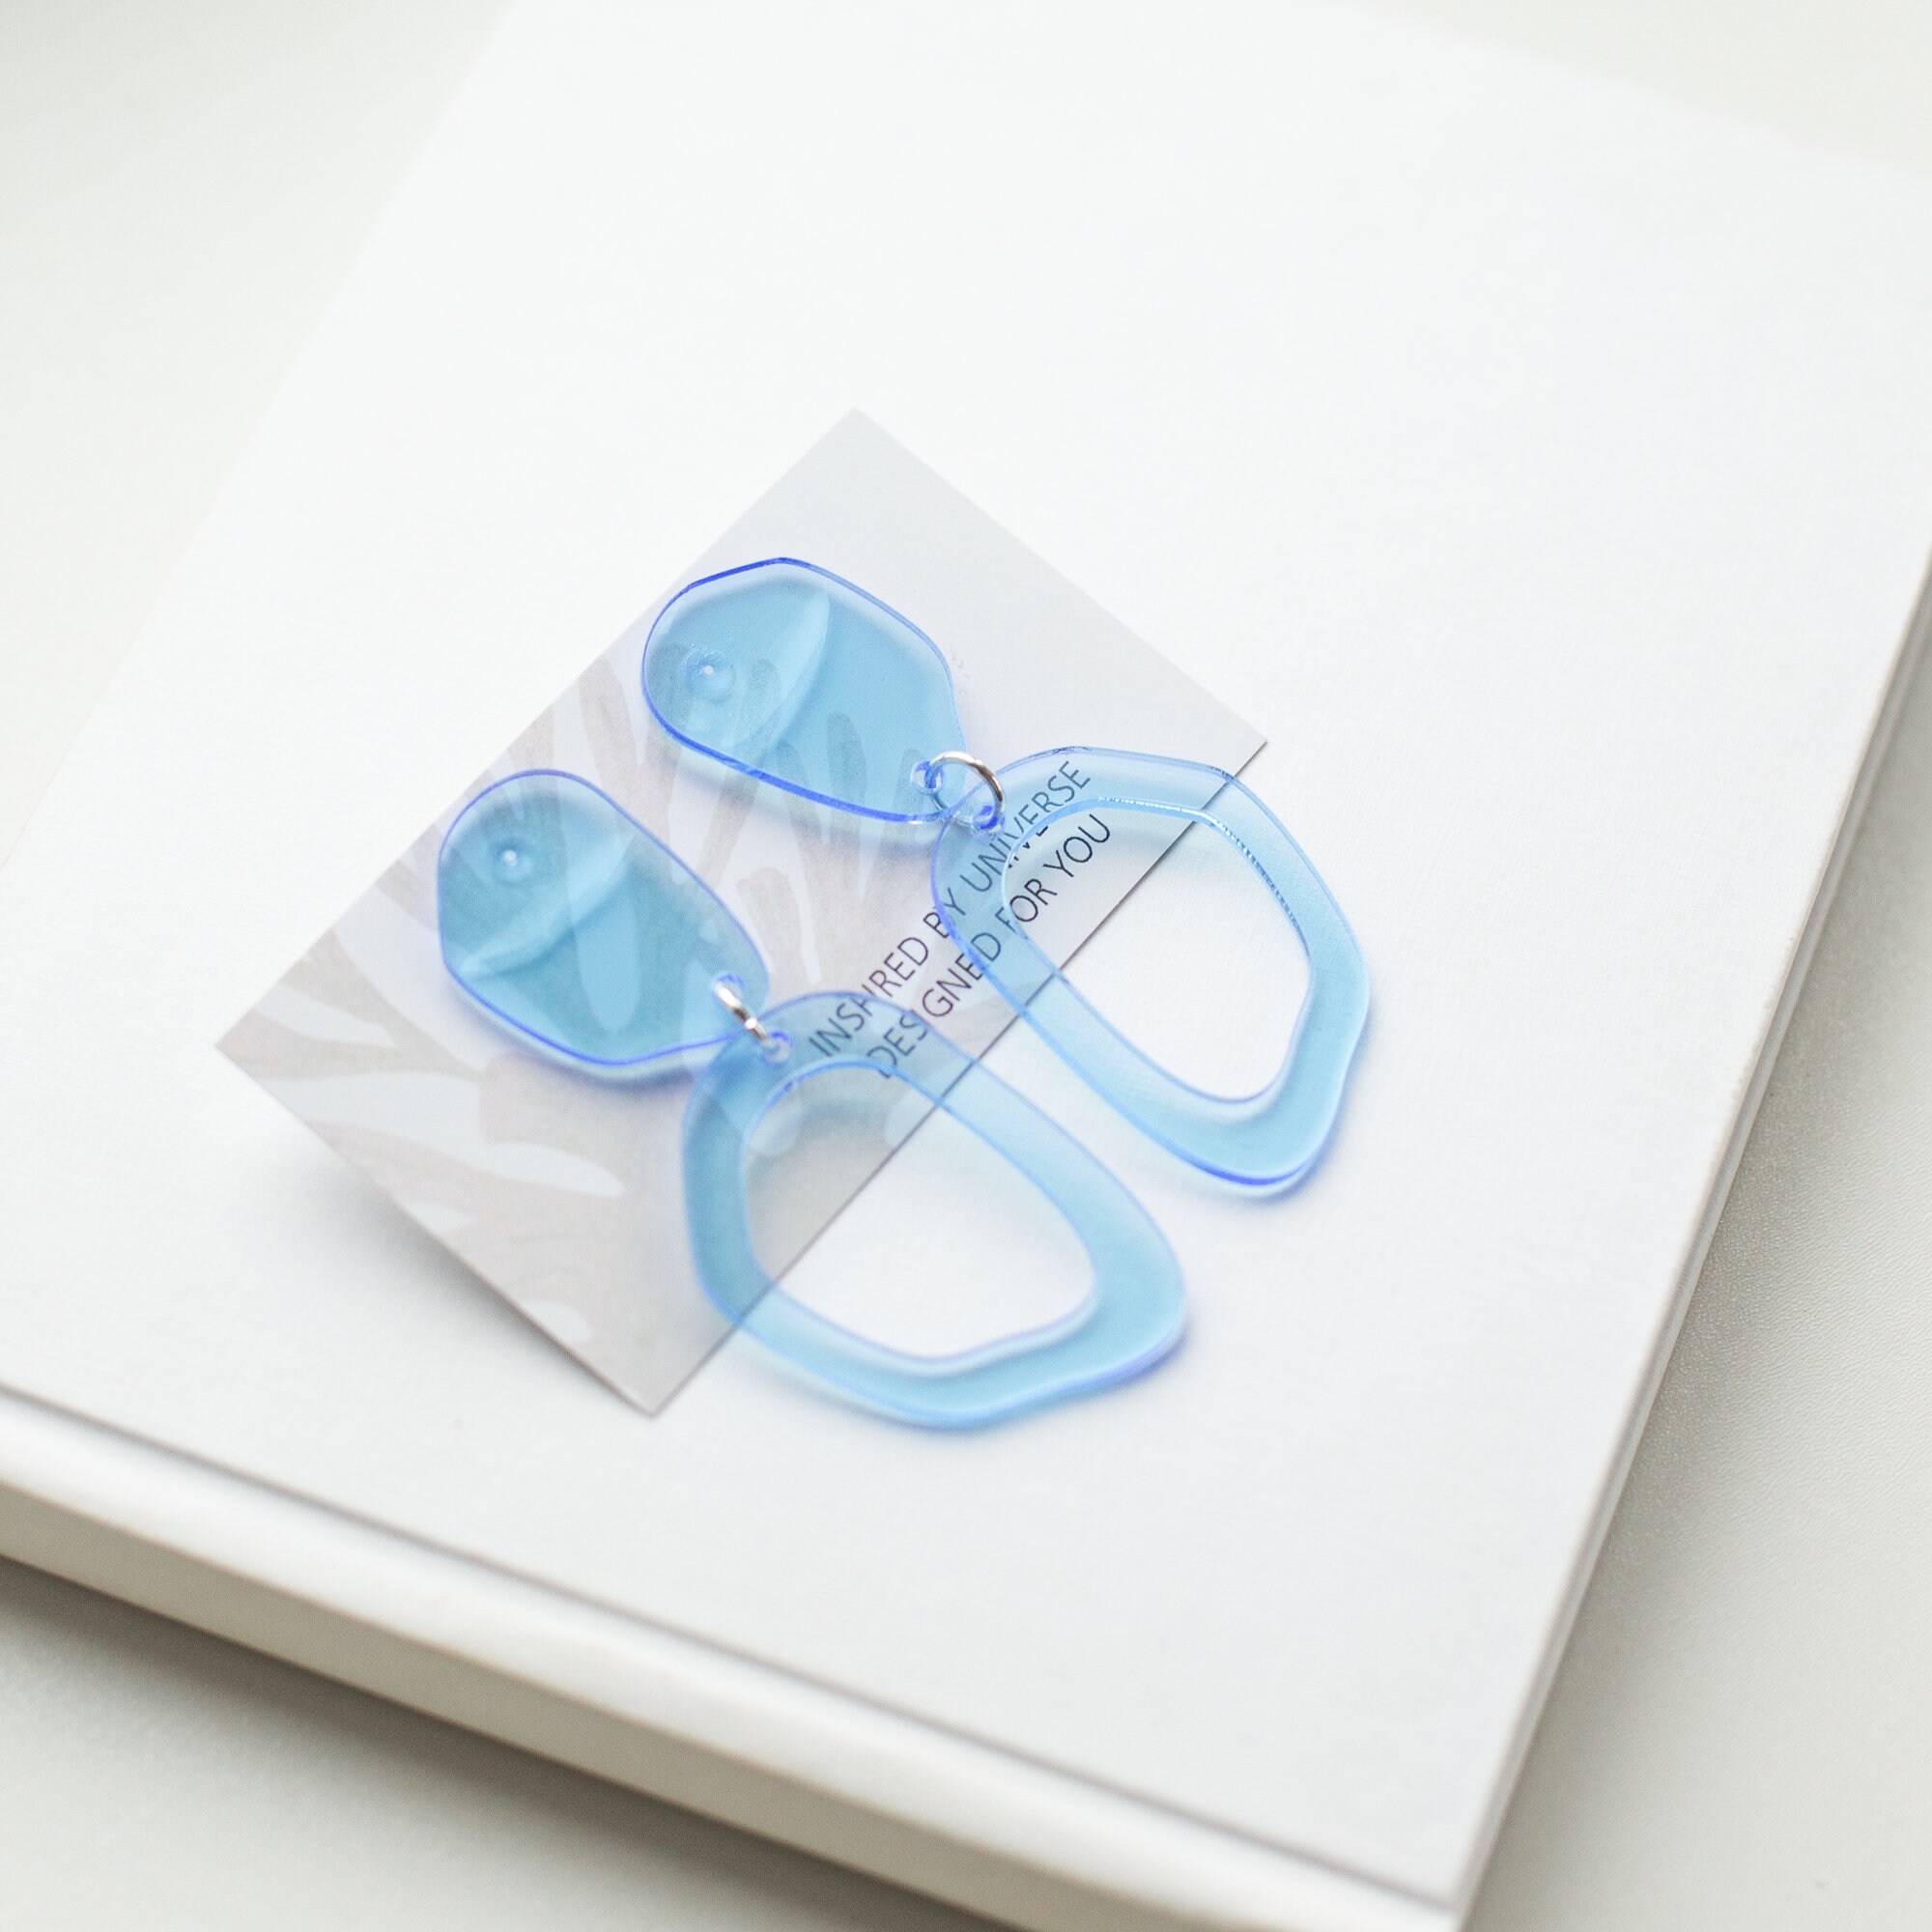 Blue clear organic shape acrylic abstract earrings Geometric | Etsy